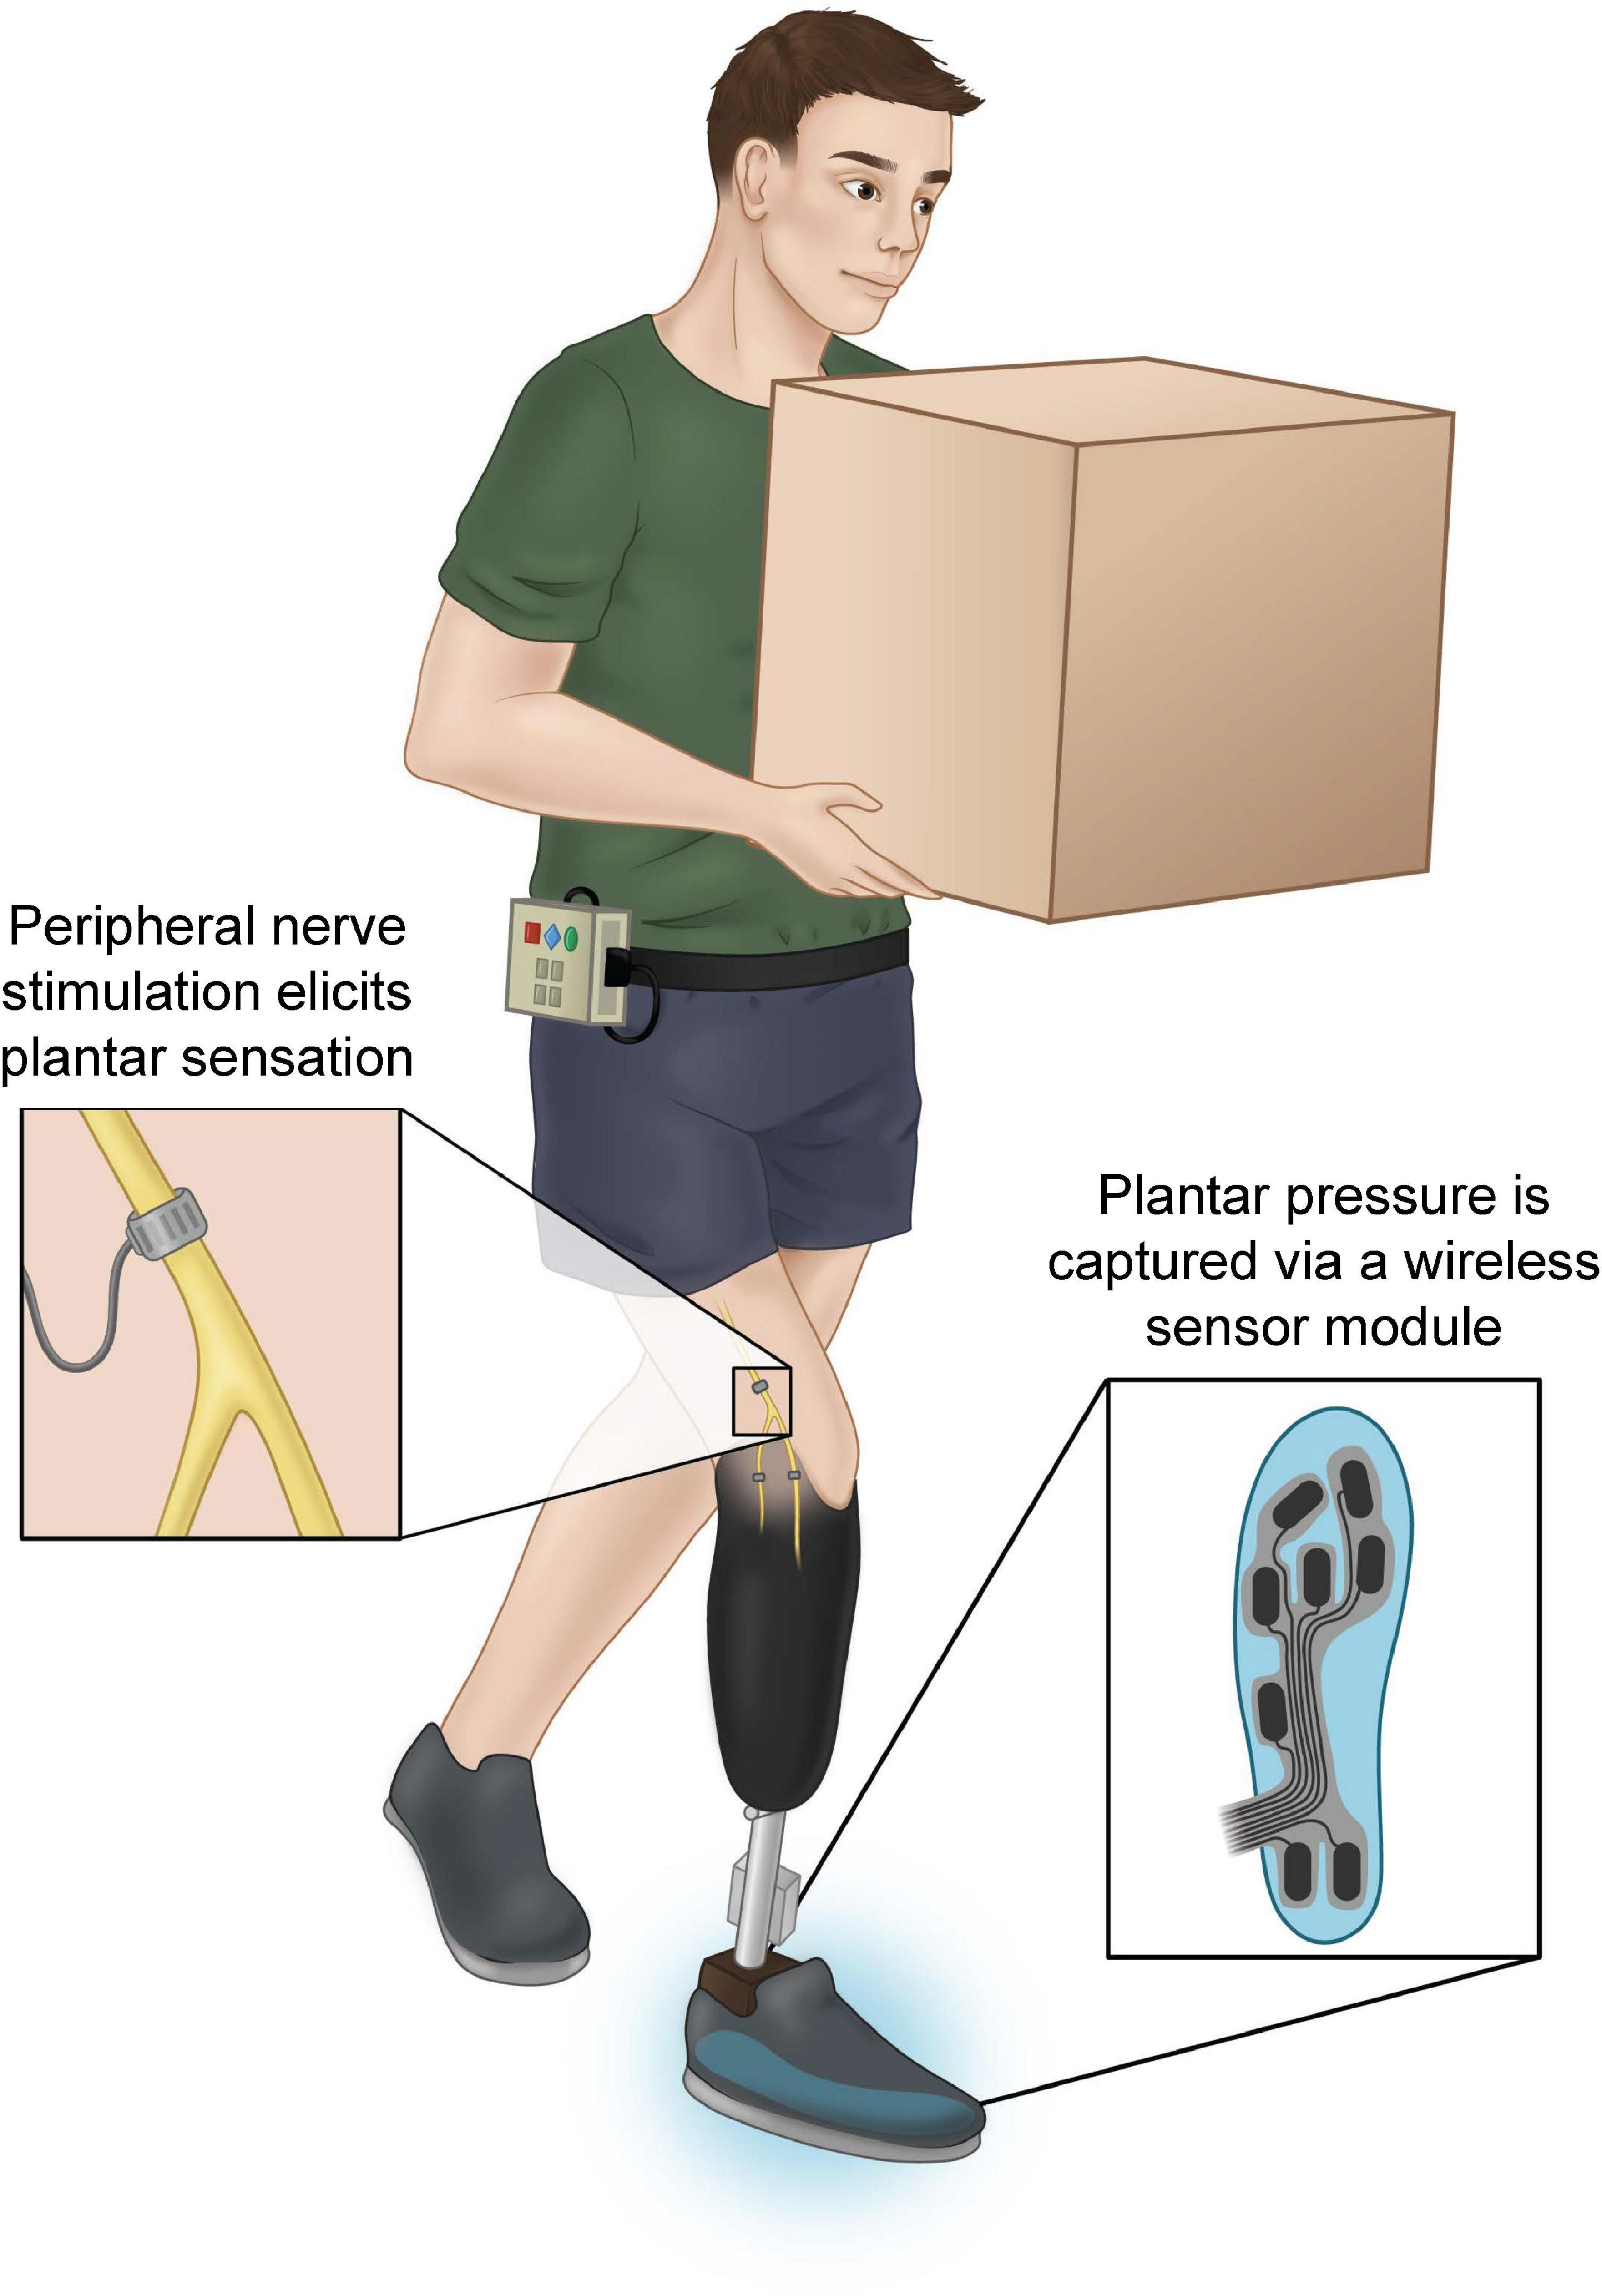 The experience of sensorimotor integration of a lower limb sensory neuroprosthesis: A qualitative case study